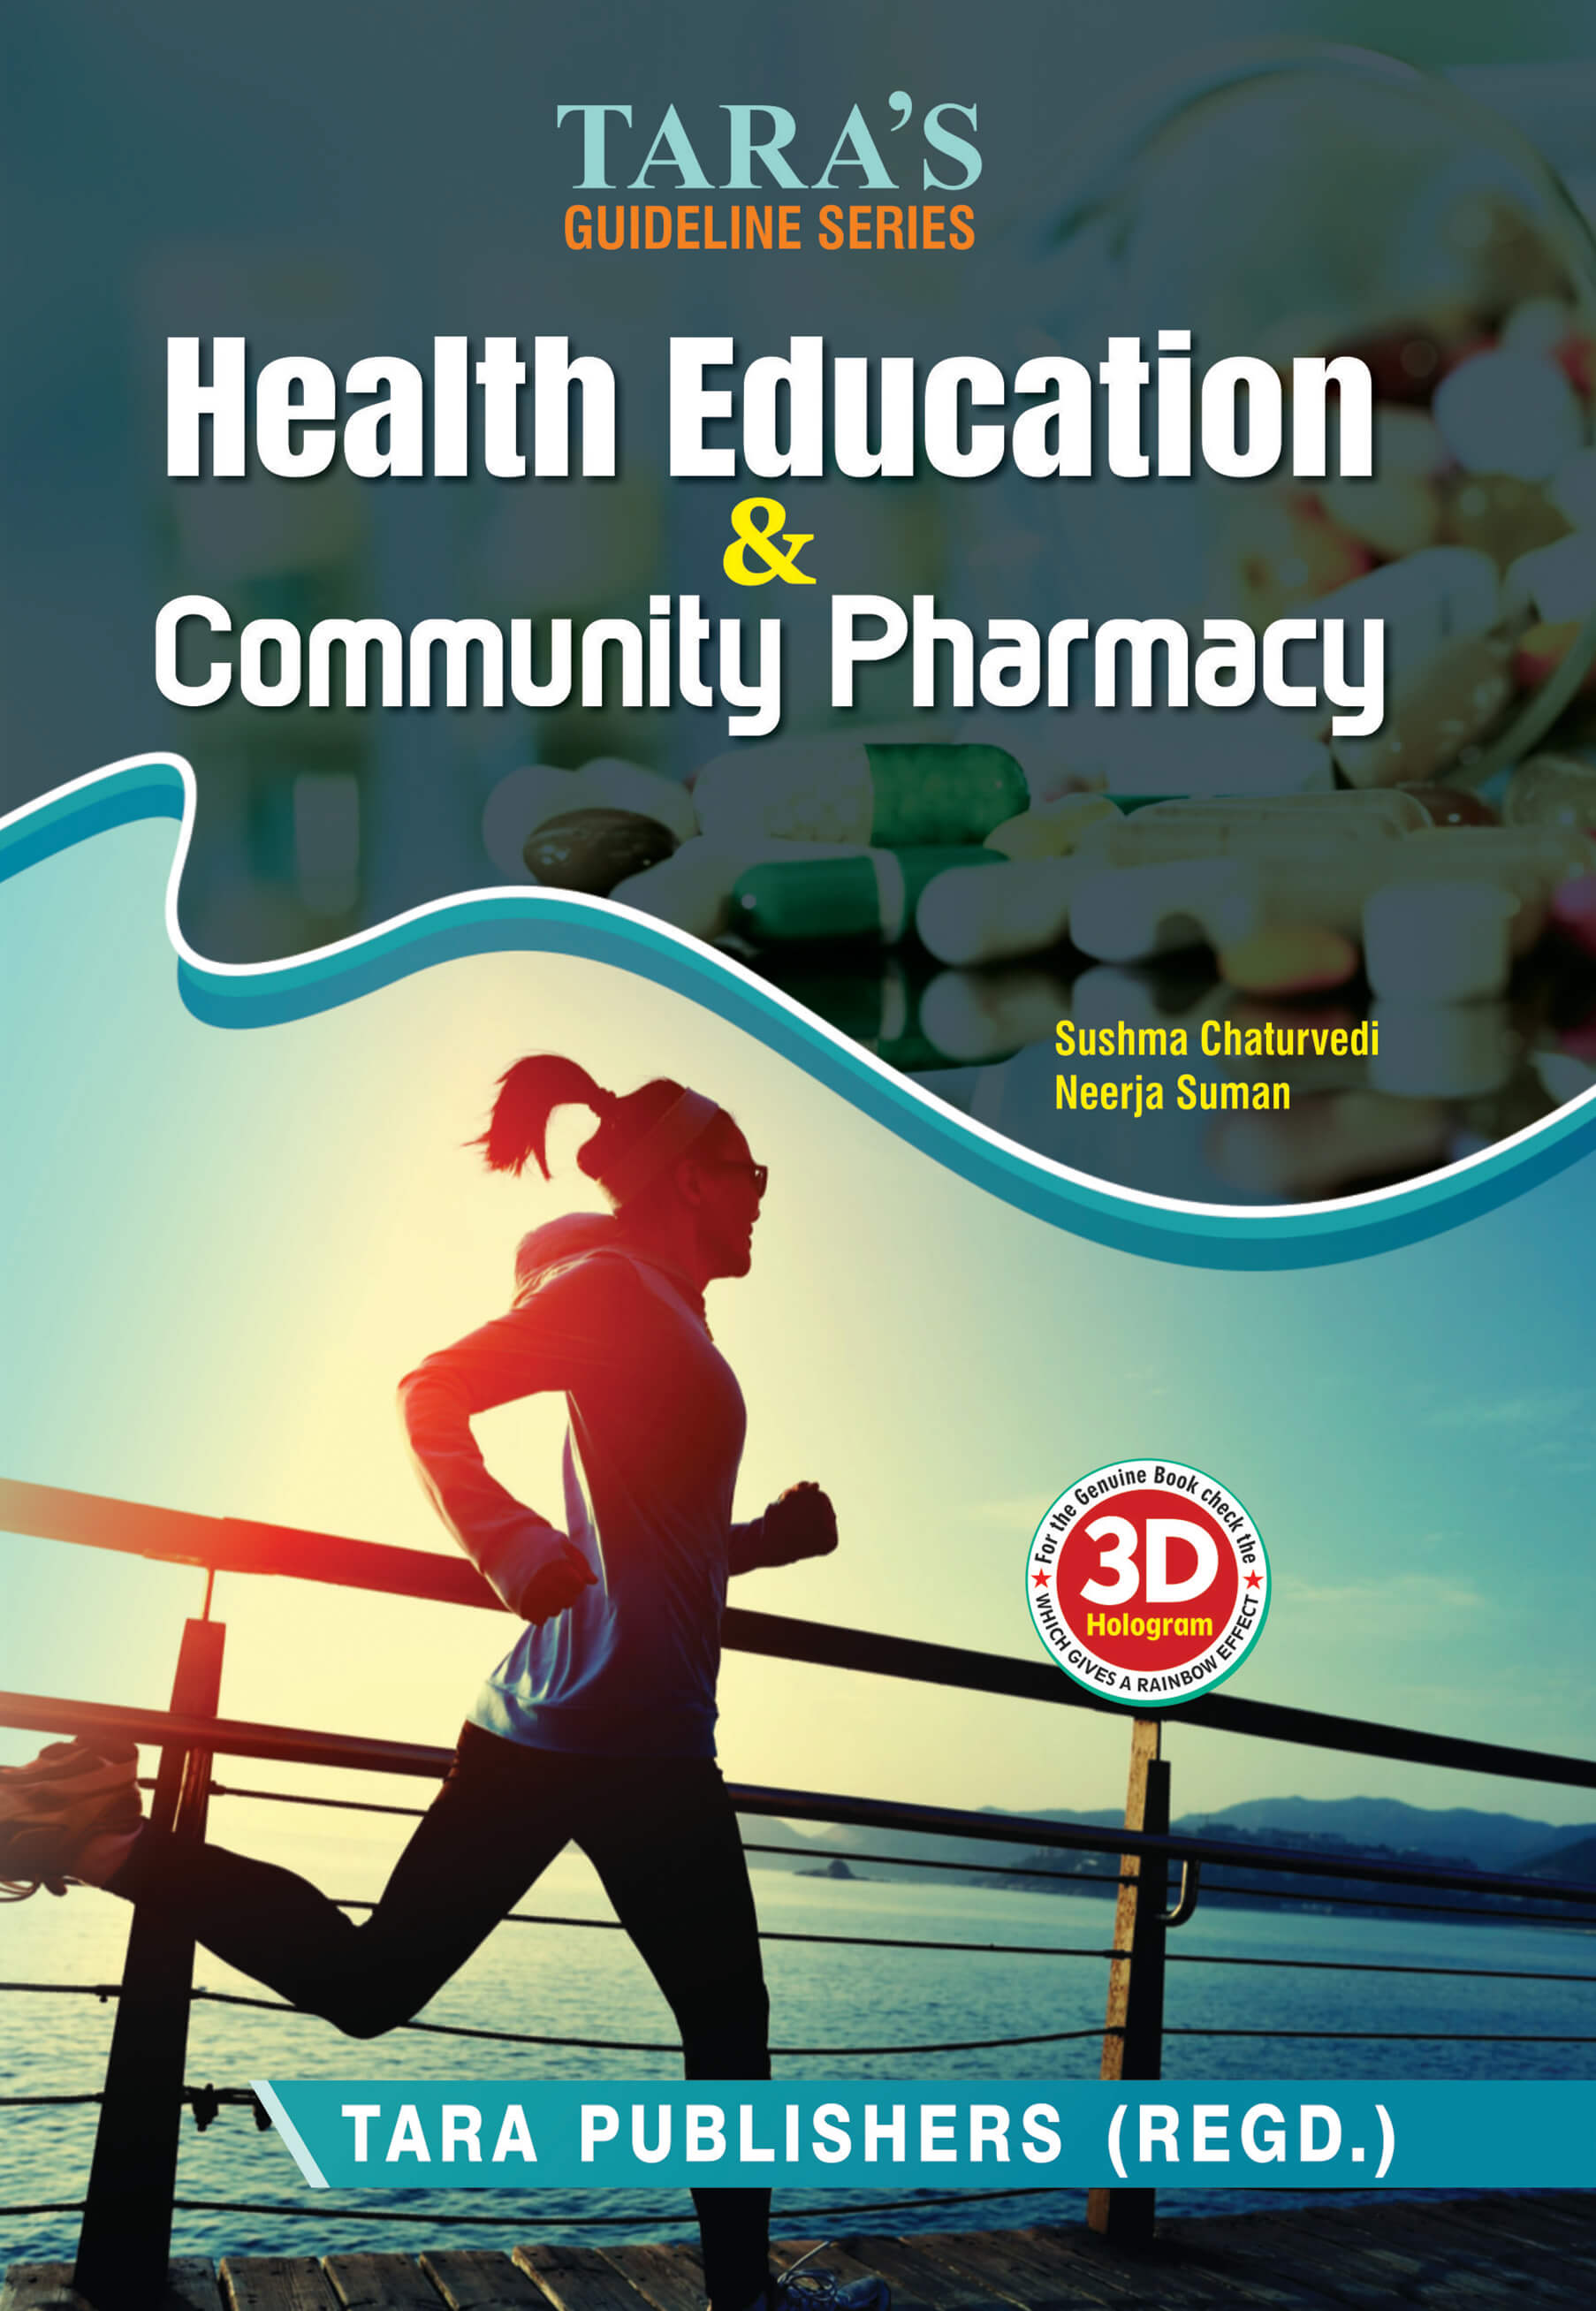 HEALTH EDUCATION & COMMUNITY PHARMACY